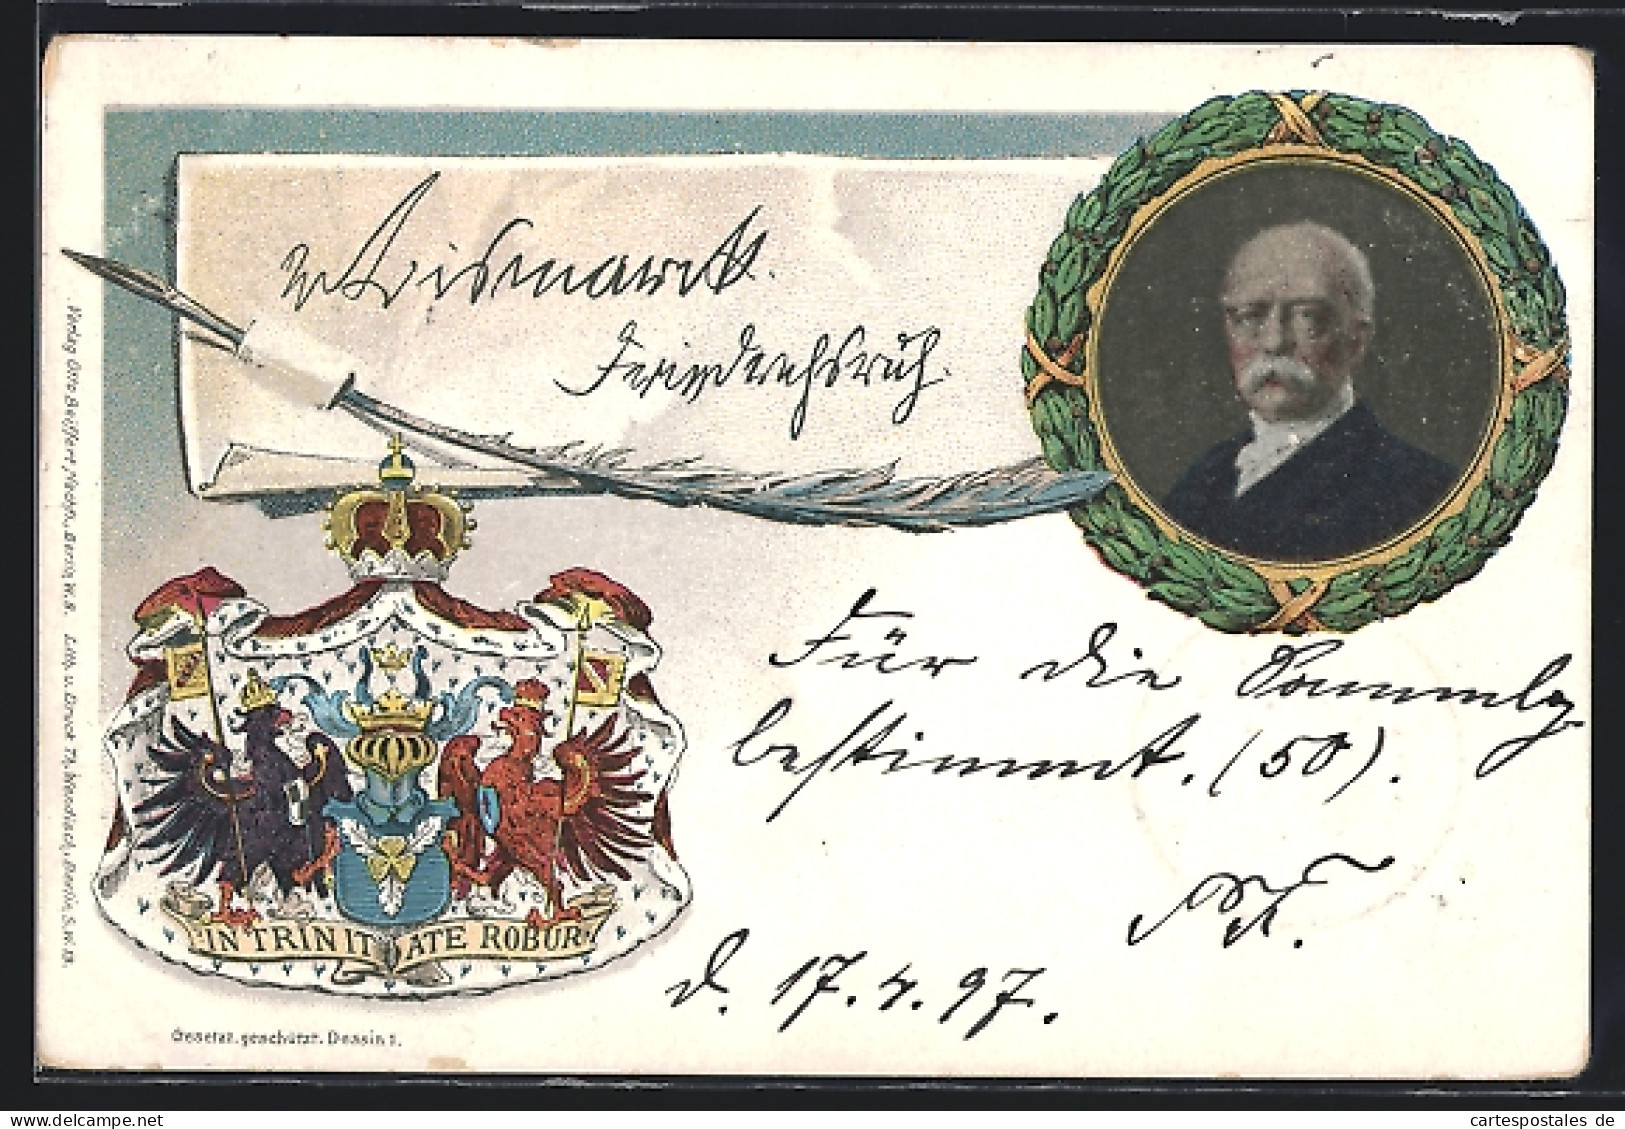 Künstler-AK Portrait Von Bismarck Mit Wappen, Ganzsache  - Personnages Historiques